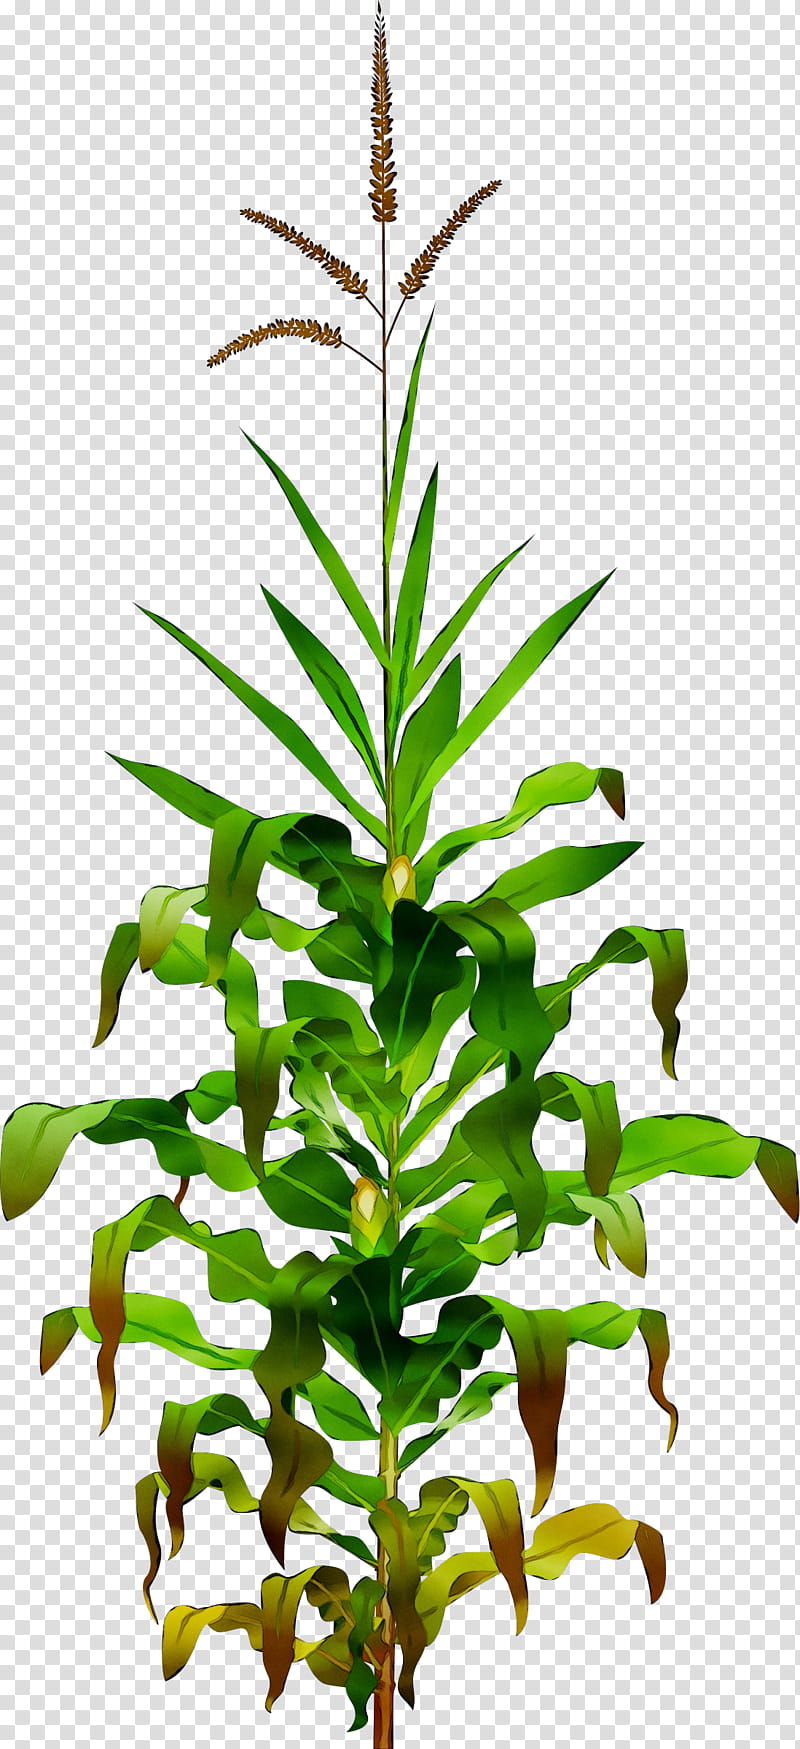 Corn, Dracaena Fragrans, Corn On The Cob, Plants, Crop, Northern Corn Leaf Blight, Drawing, Flower transparent background PNG clipart